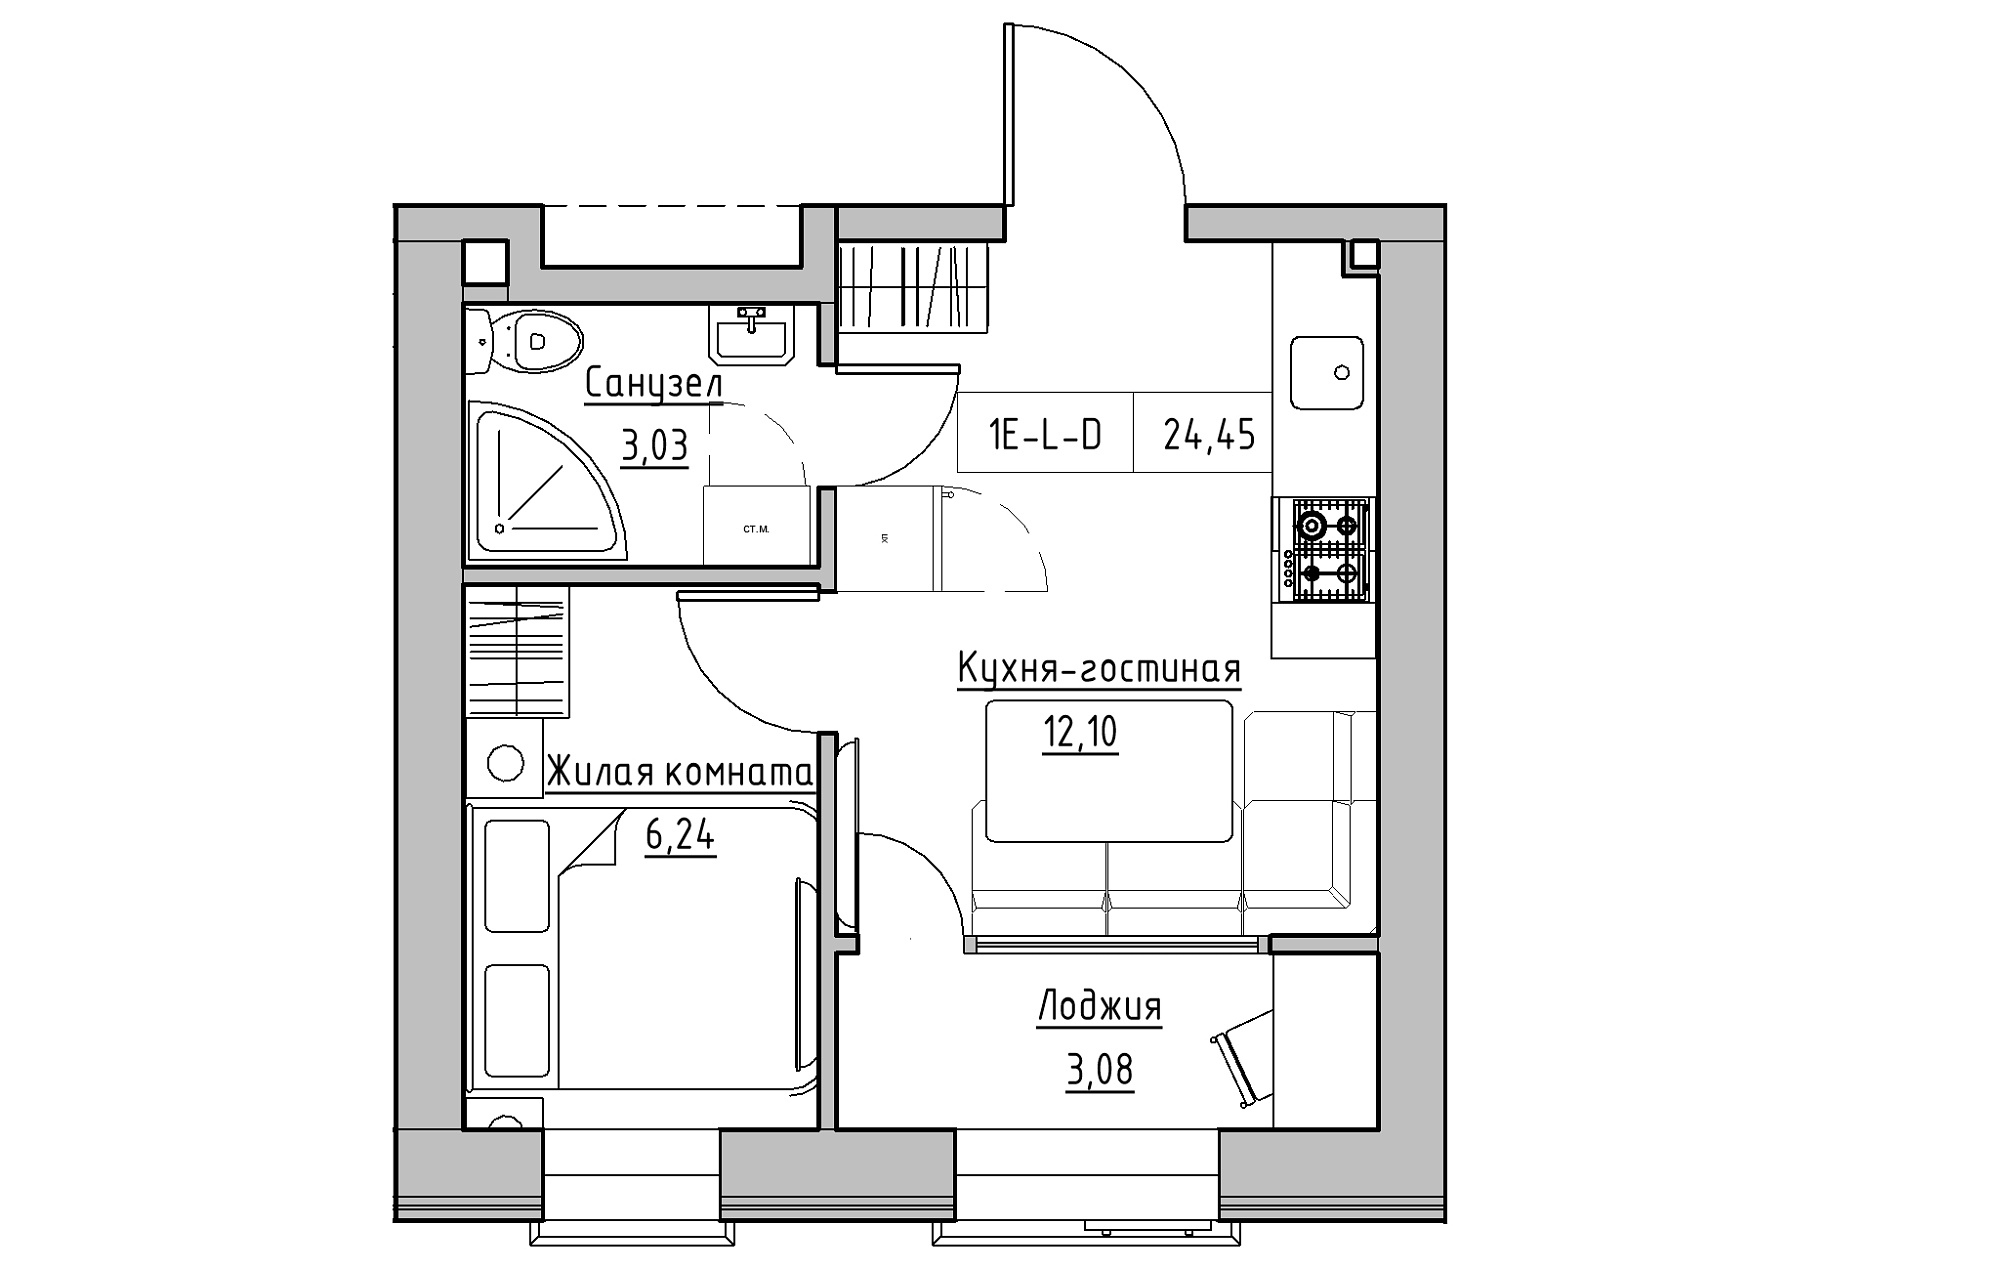 Planning 1-rm flats area 24.45m2, KS-018-03/0002.